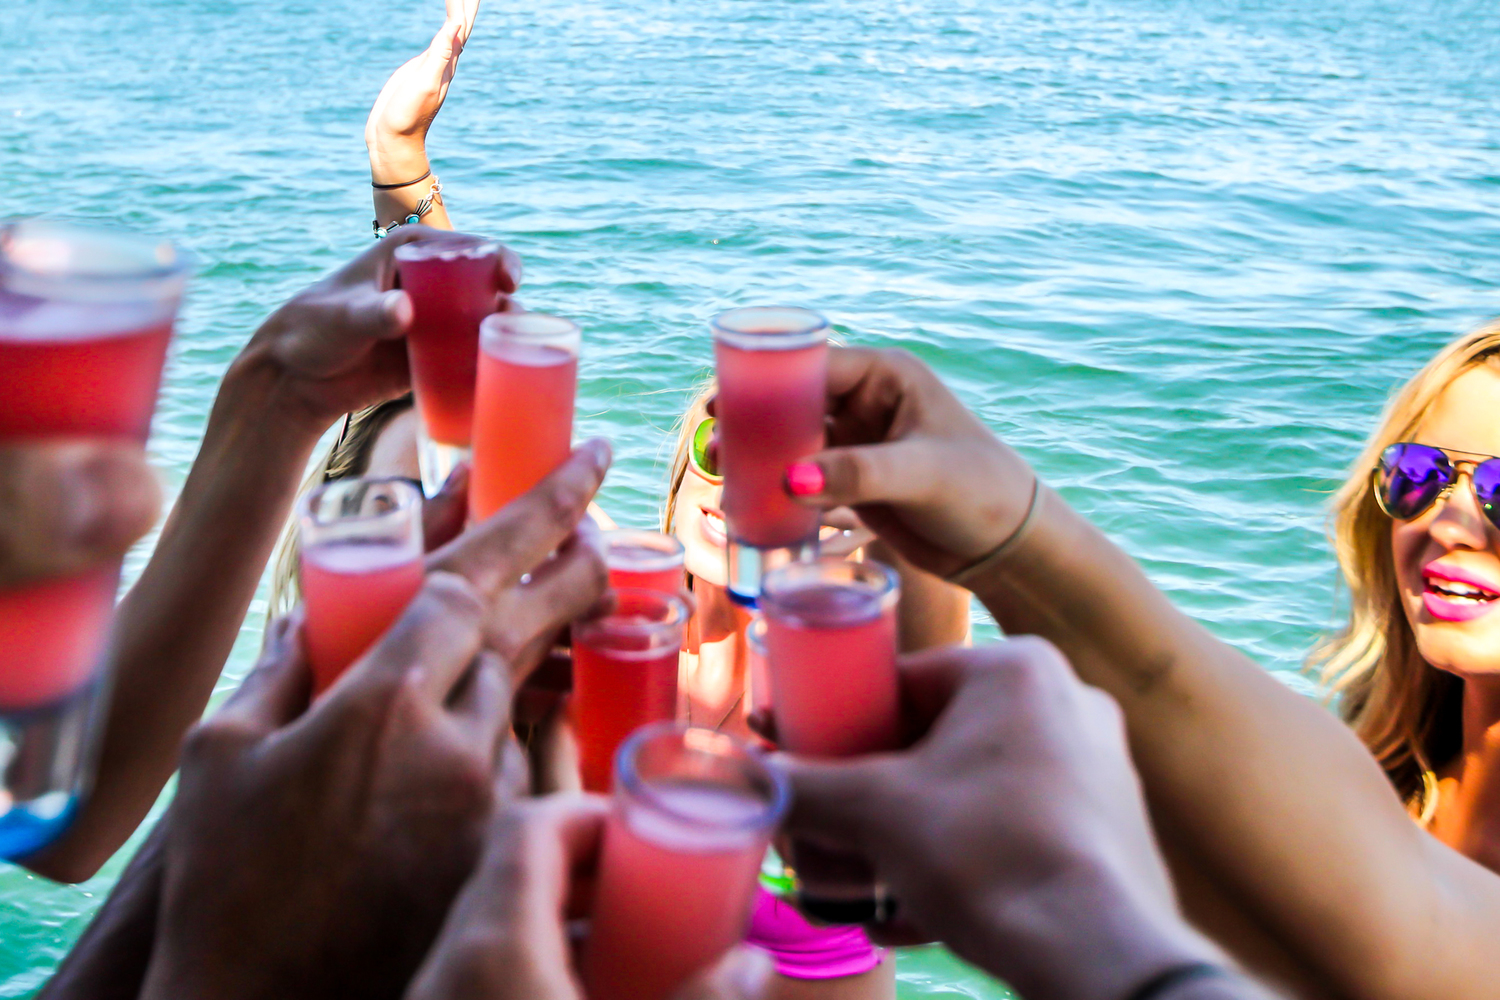 booze cruise in san diego